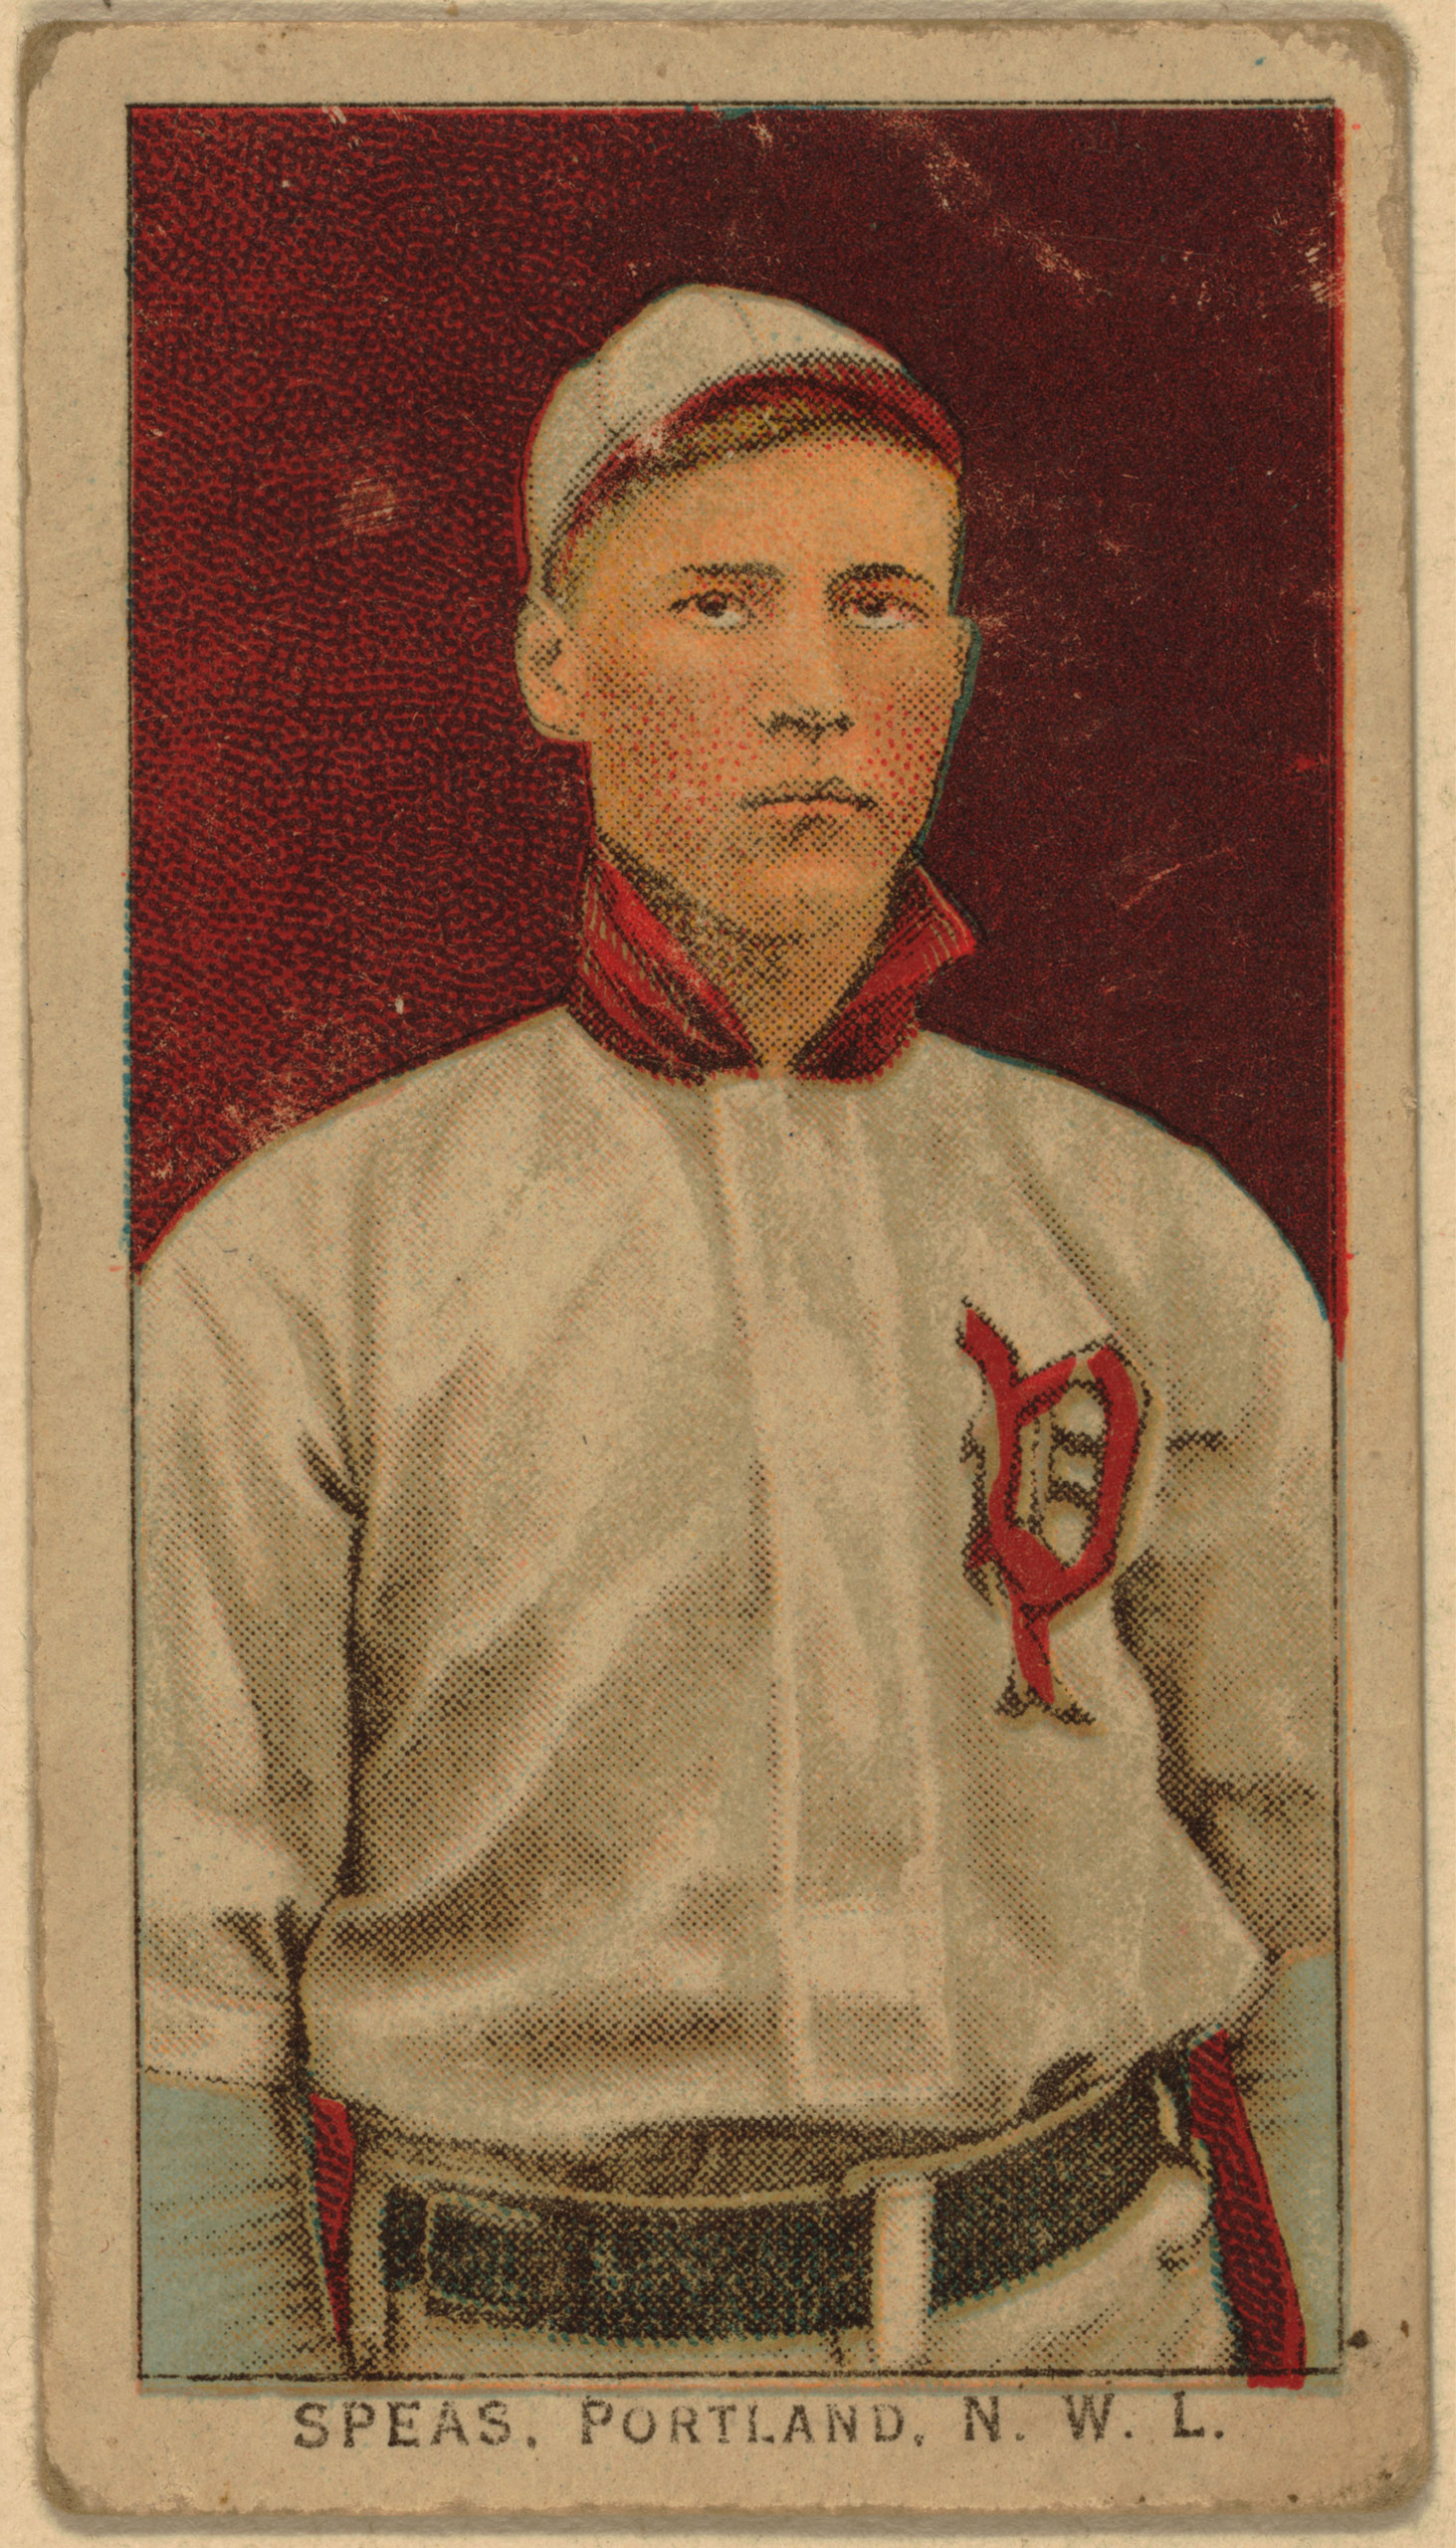 Speas, Portland Team, baseball card, 1911.